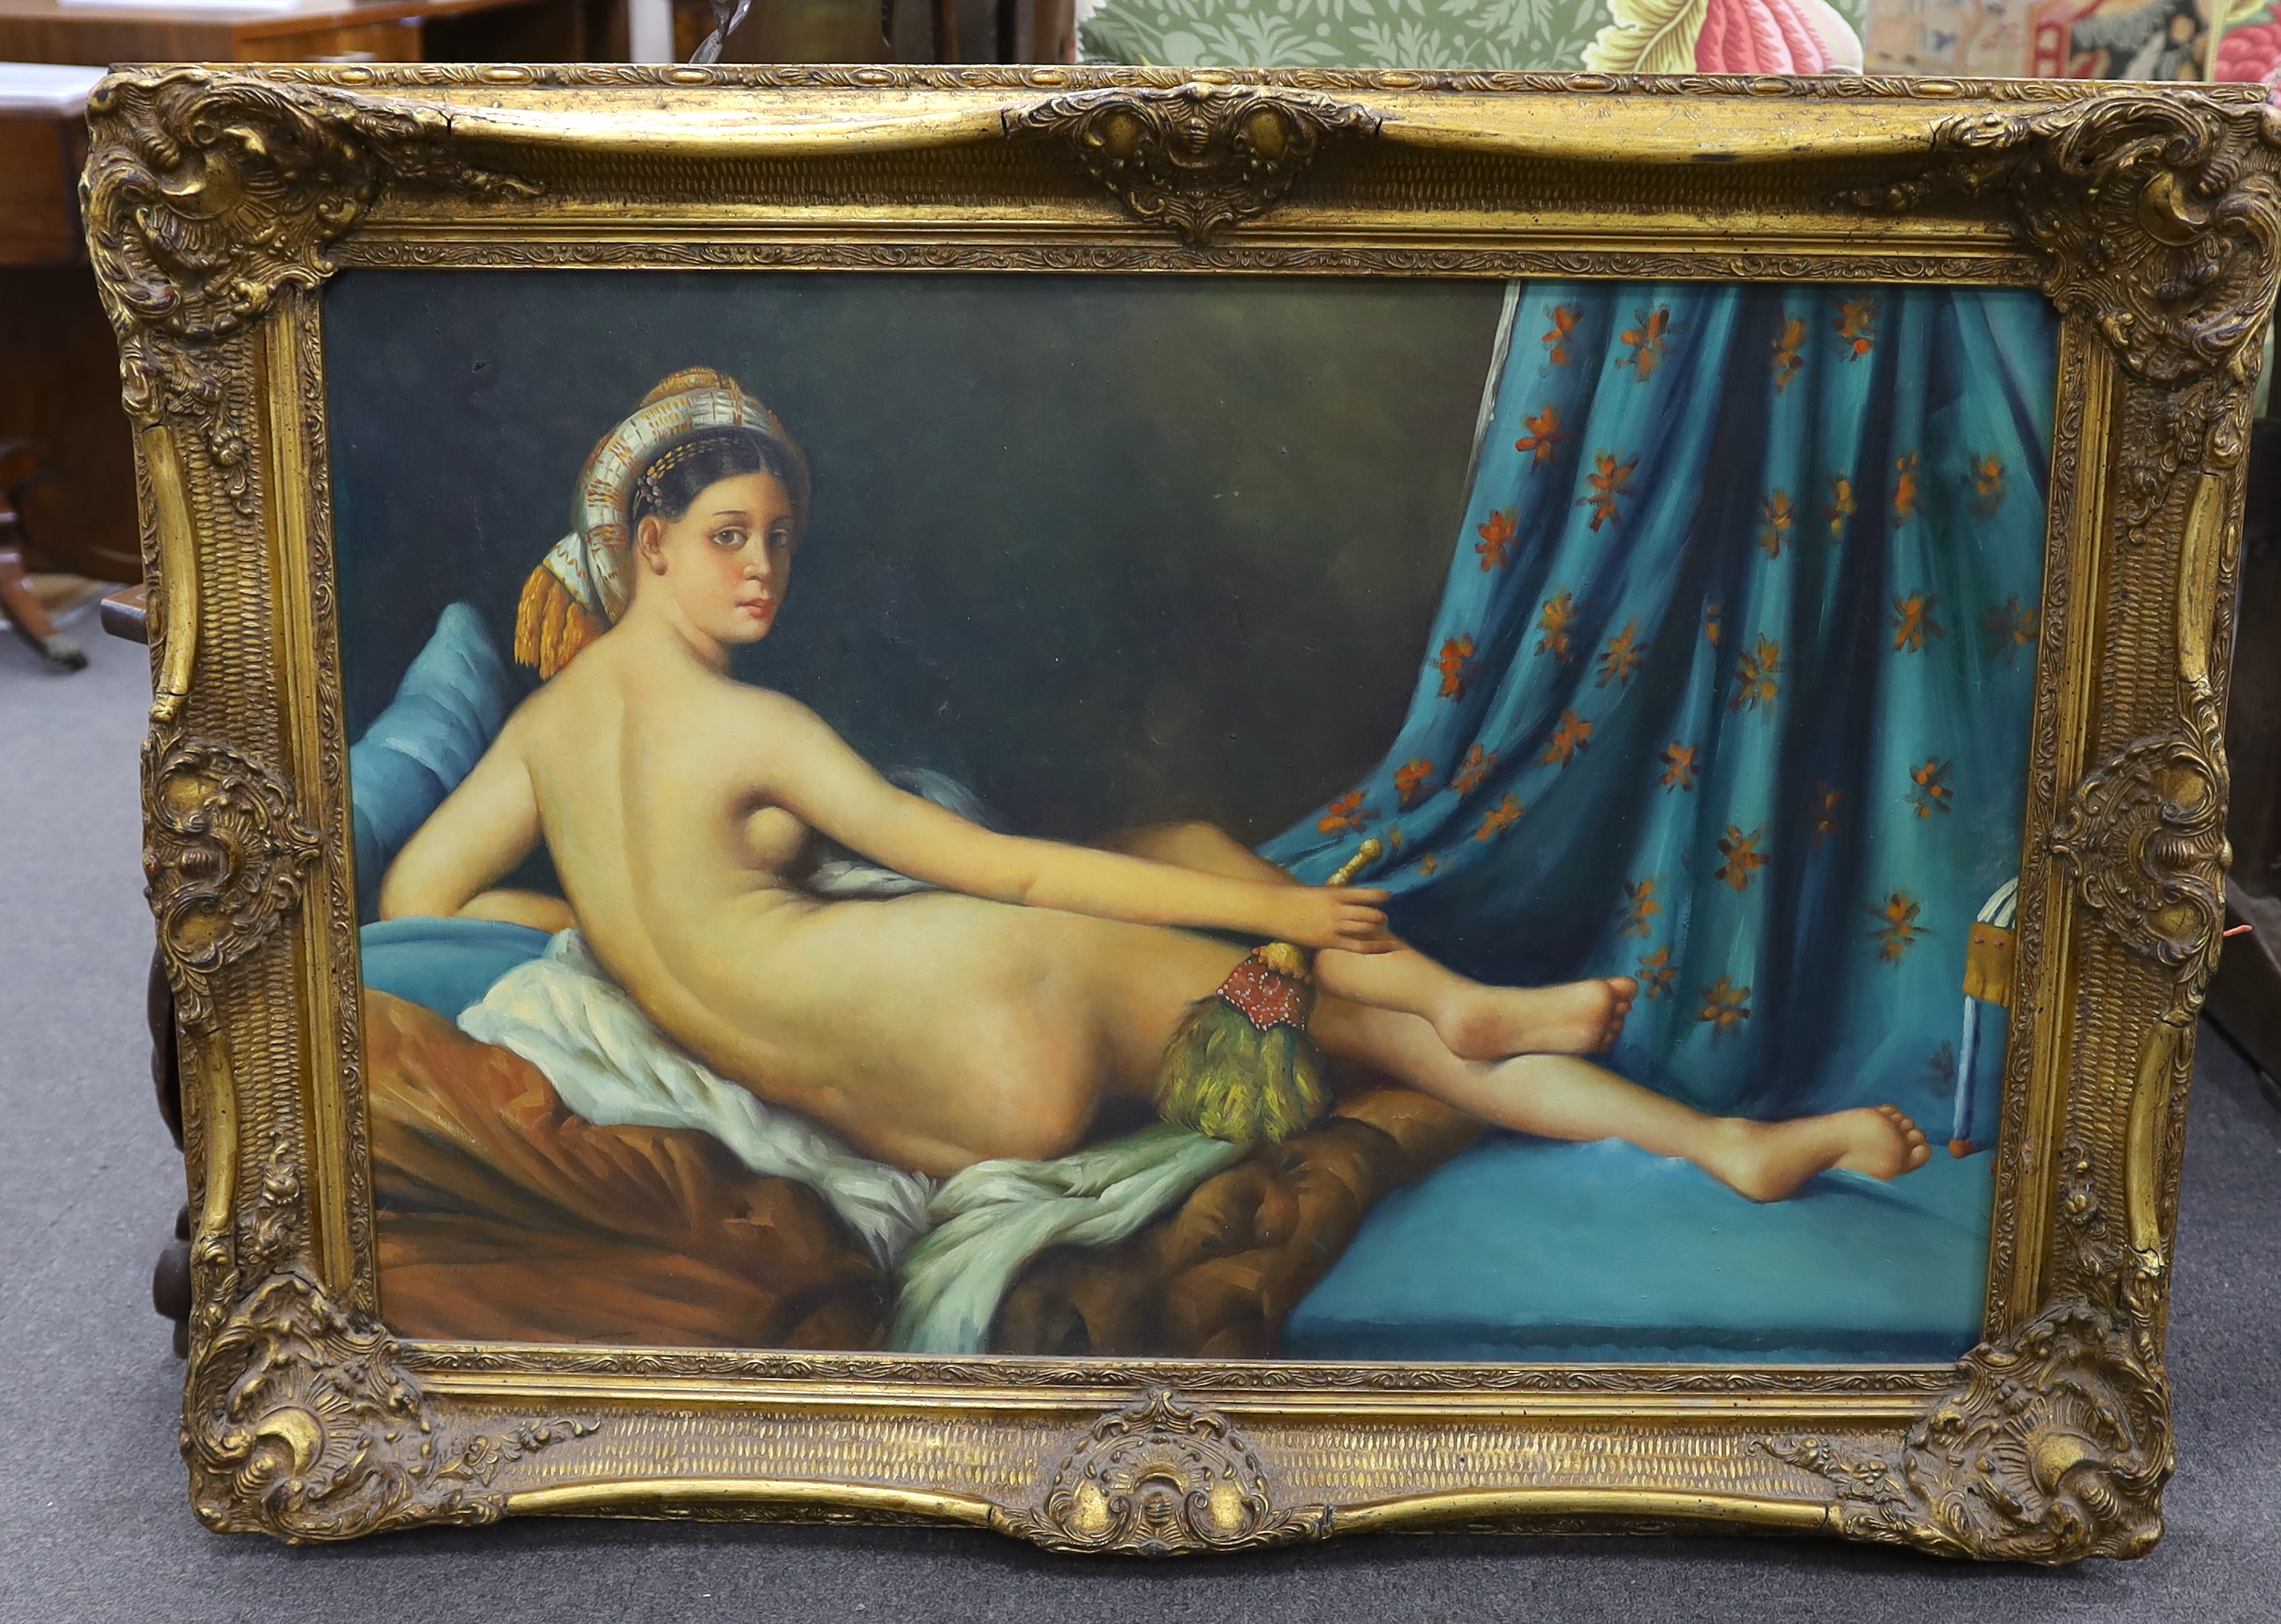 Contemporary, oil on canvas, 'The Grand Odalisque', 59 x 90cm, ornate gilt framed